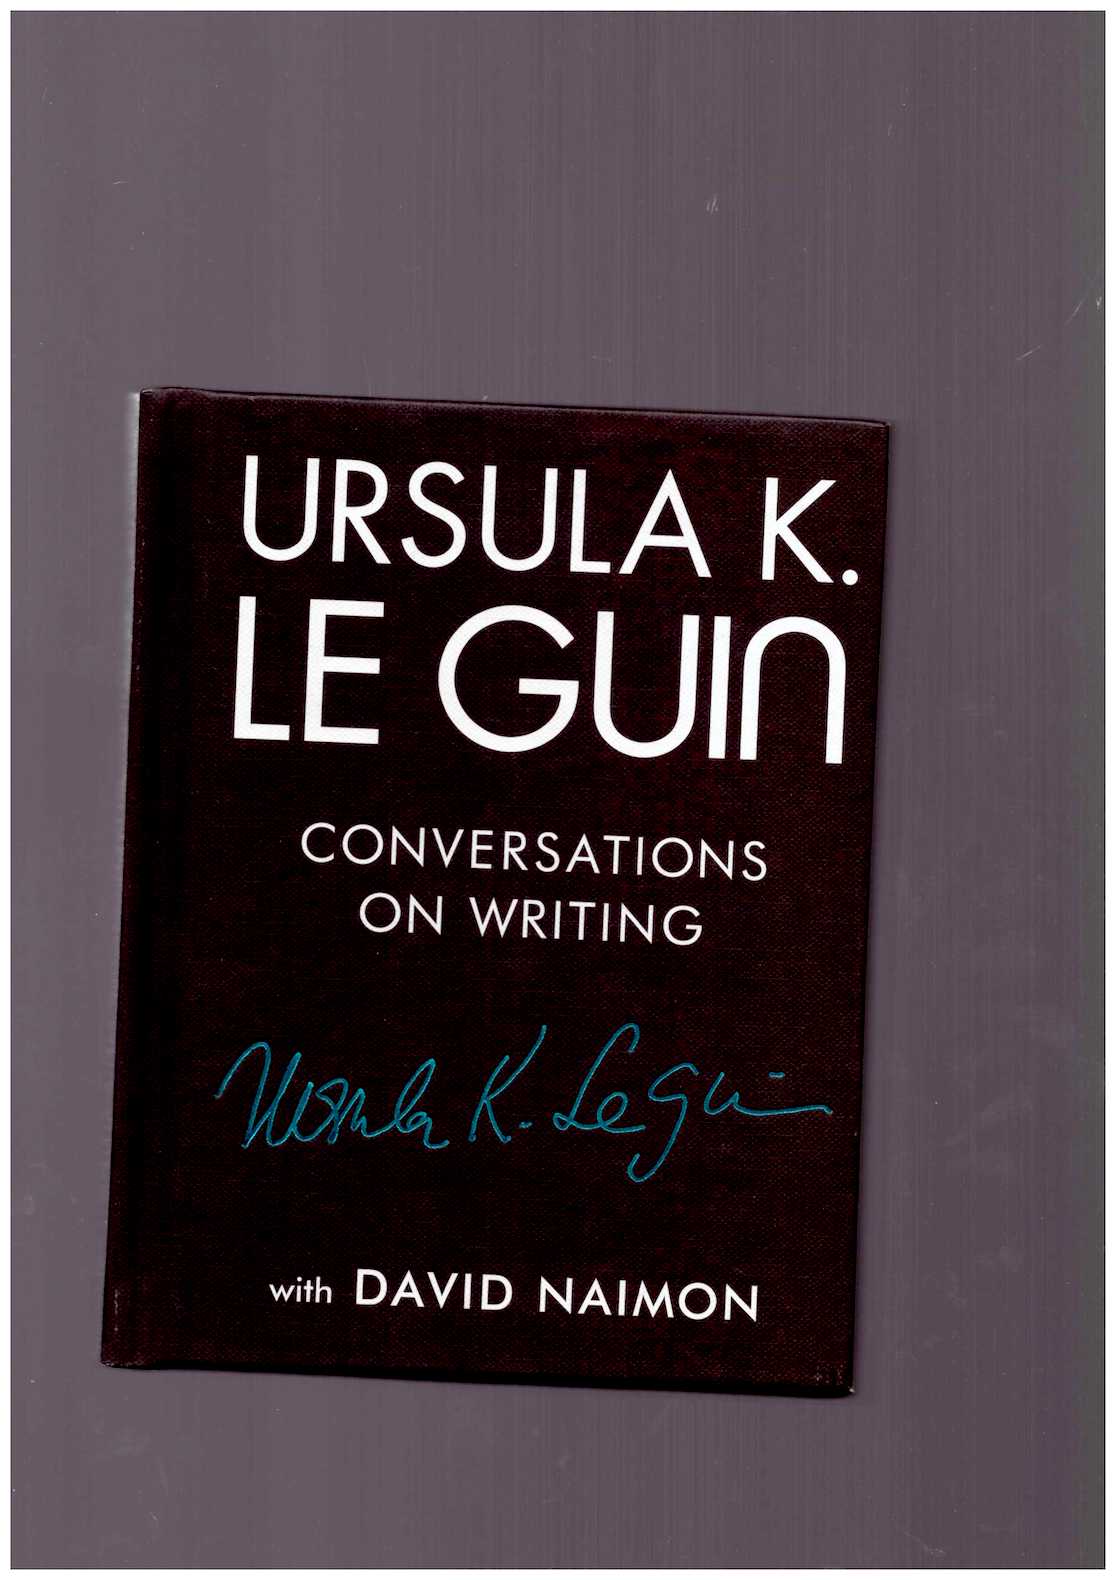 LE GUIN, Ursula K.; NAIMON, David - Conversations on Writing